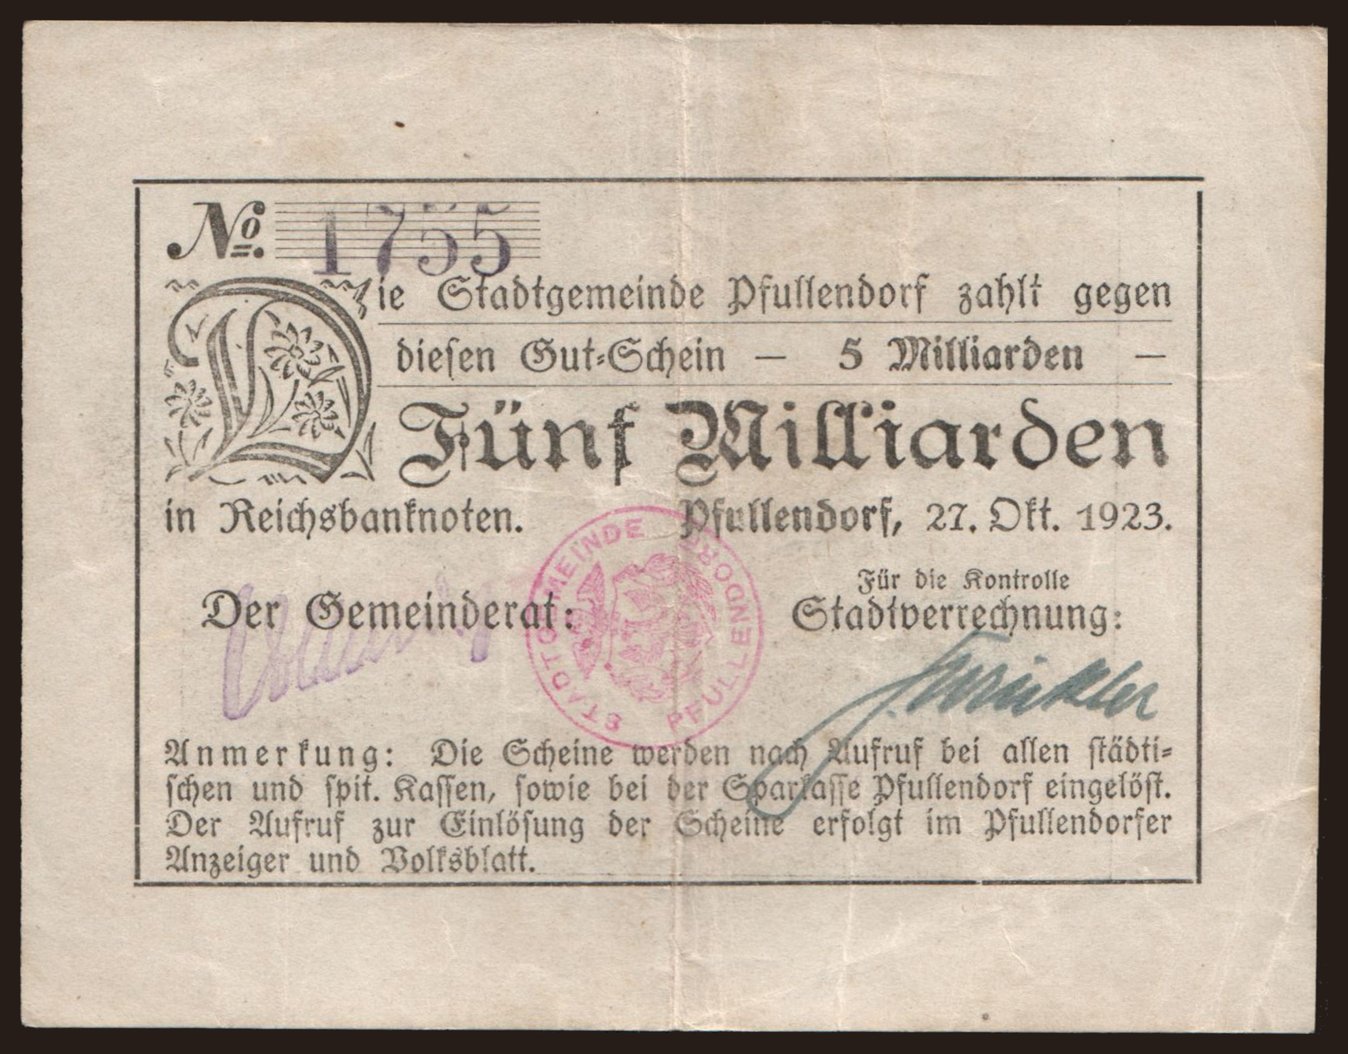 Pfullendorf/ Stadt, 5.000.000.000 Mark, 1923